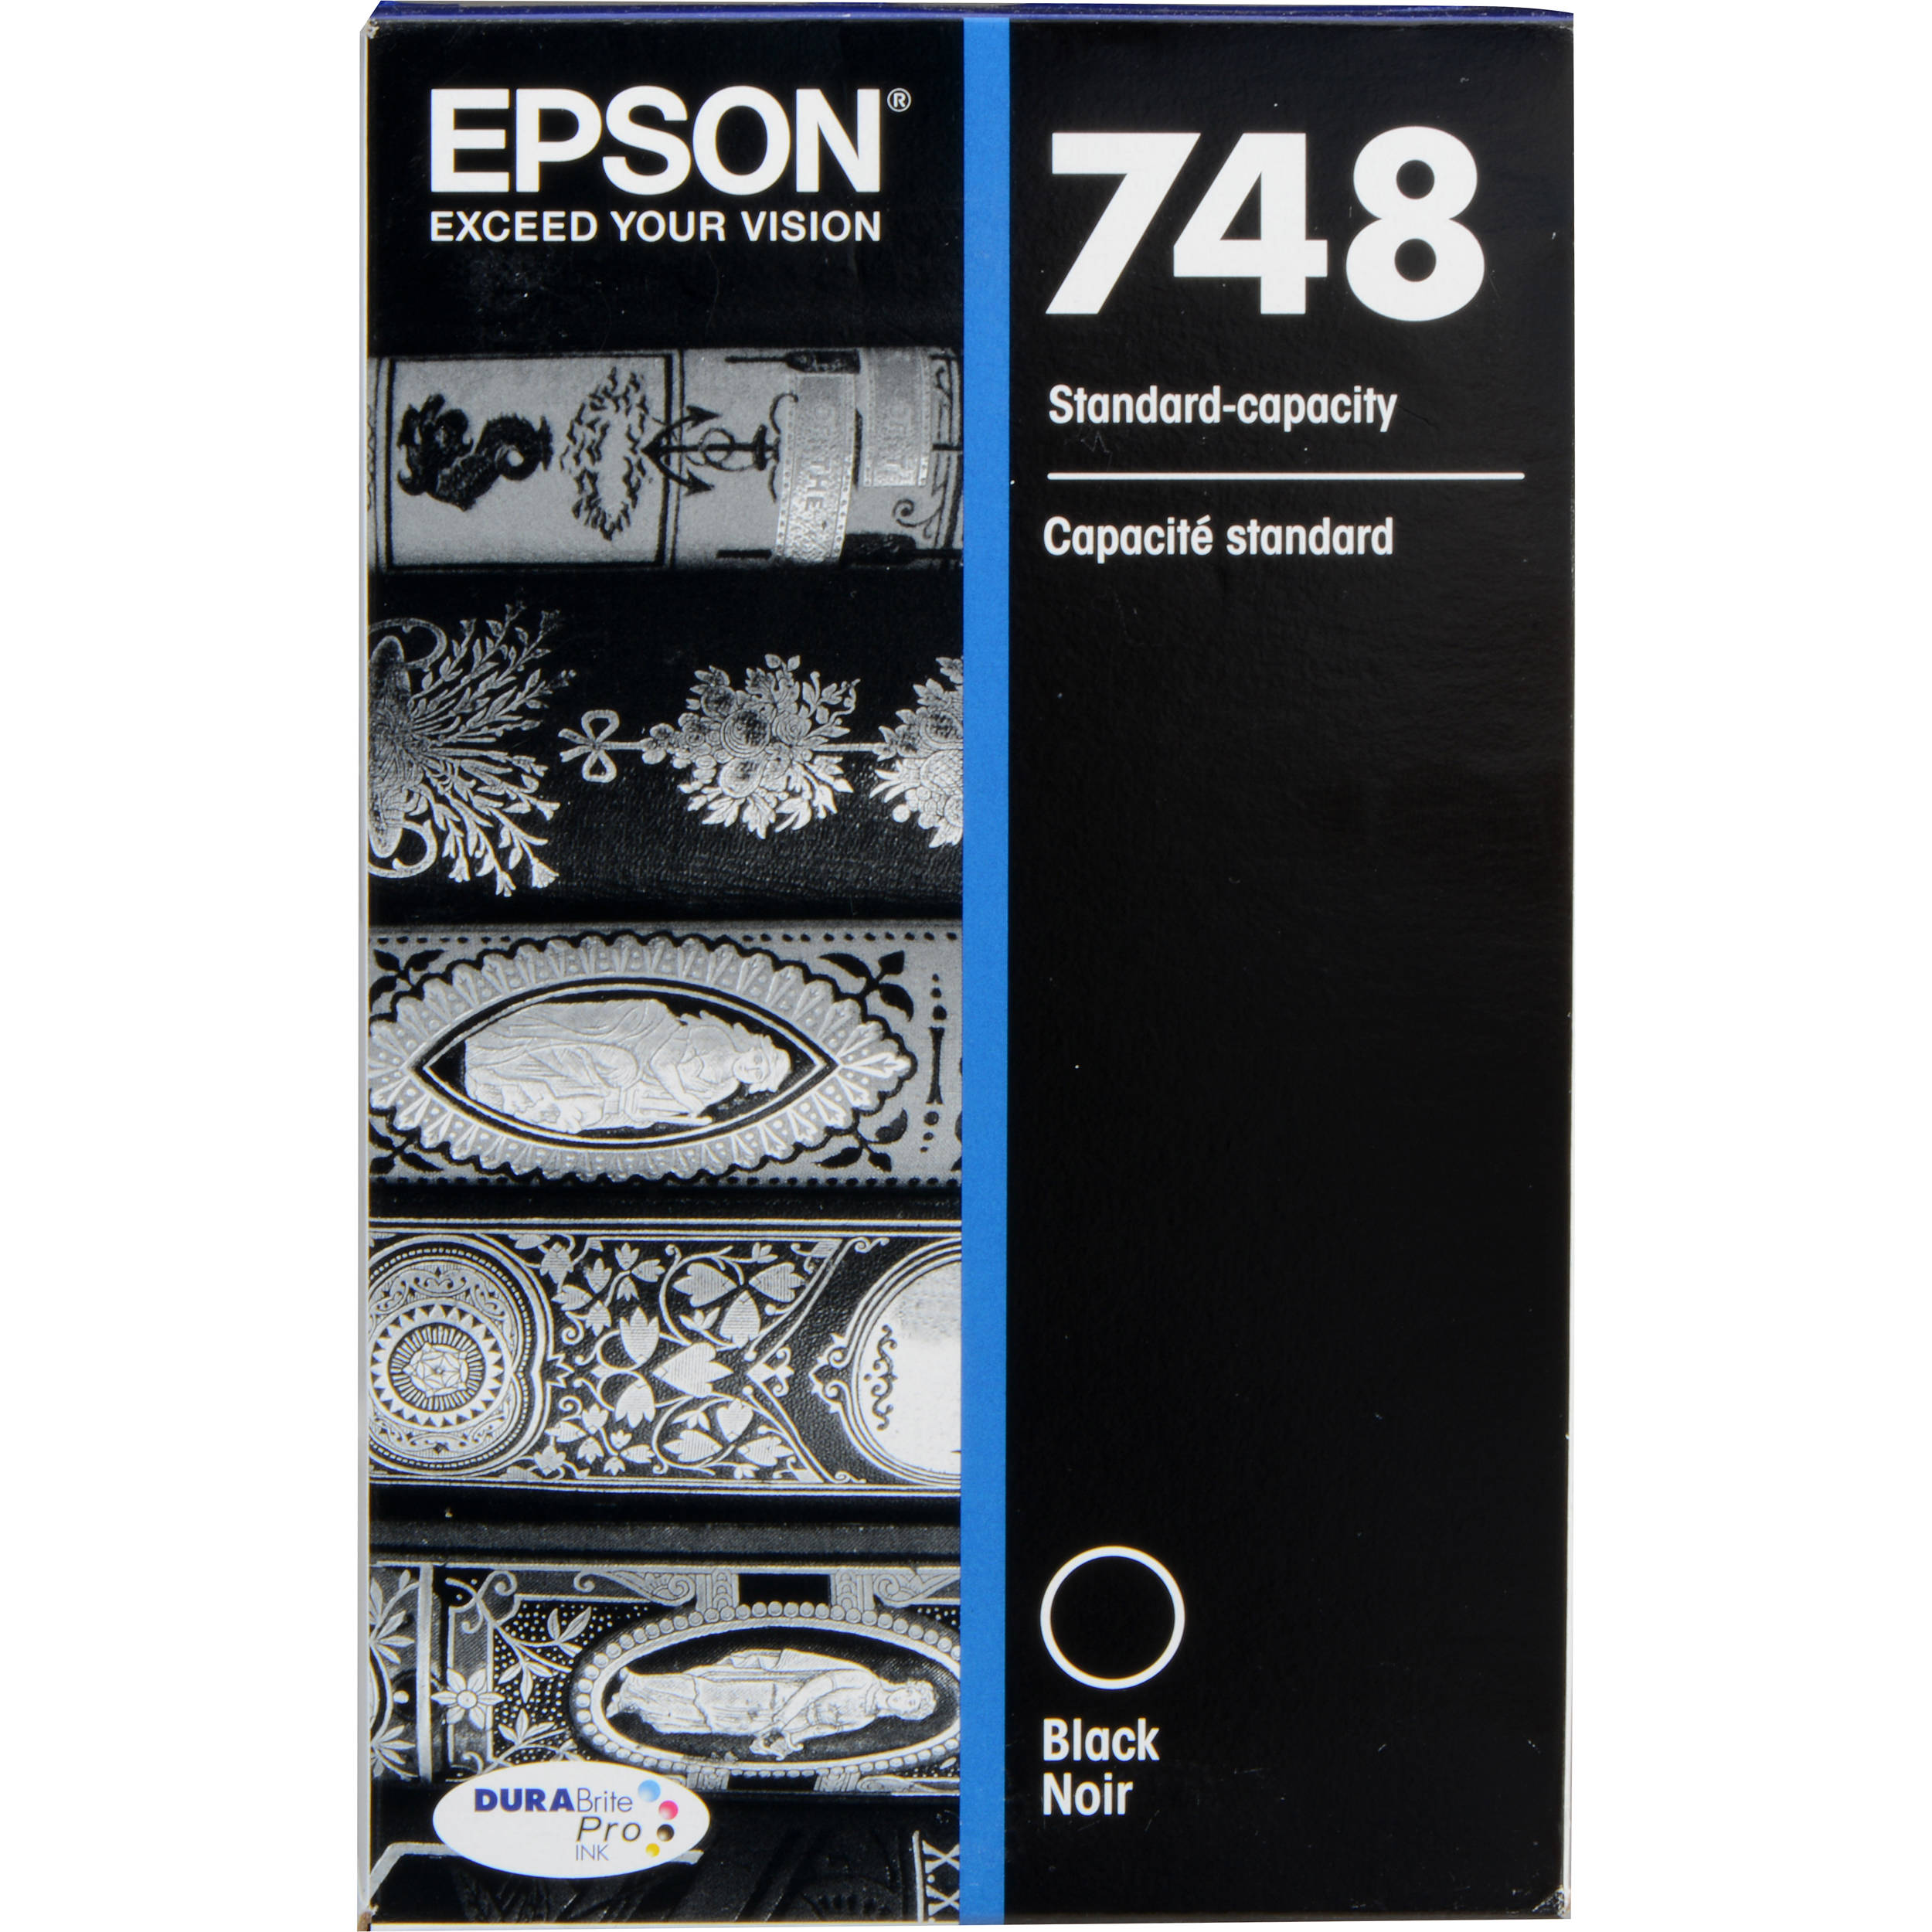 Epson 748 Standard-Capacity Black Ink Cartridge